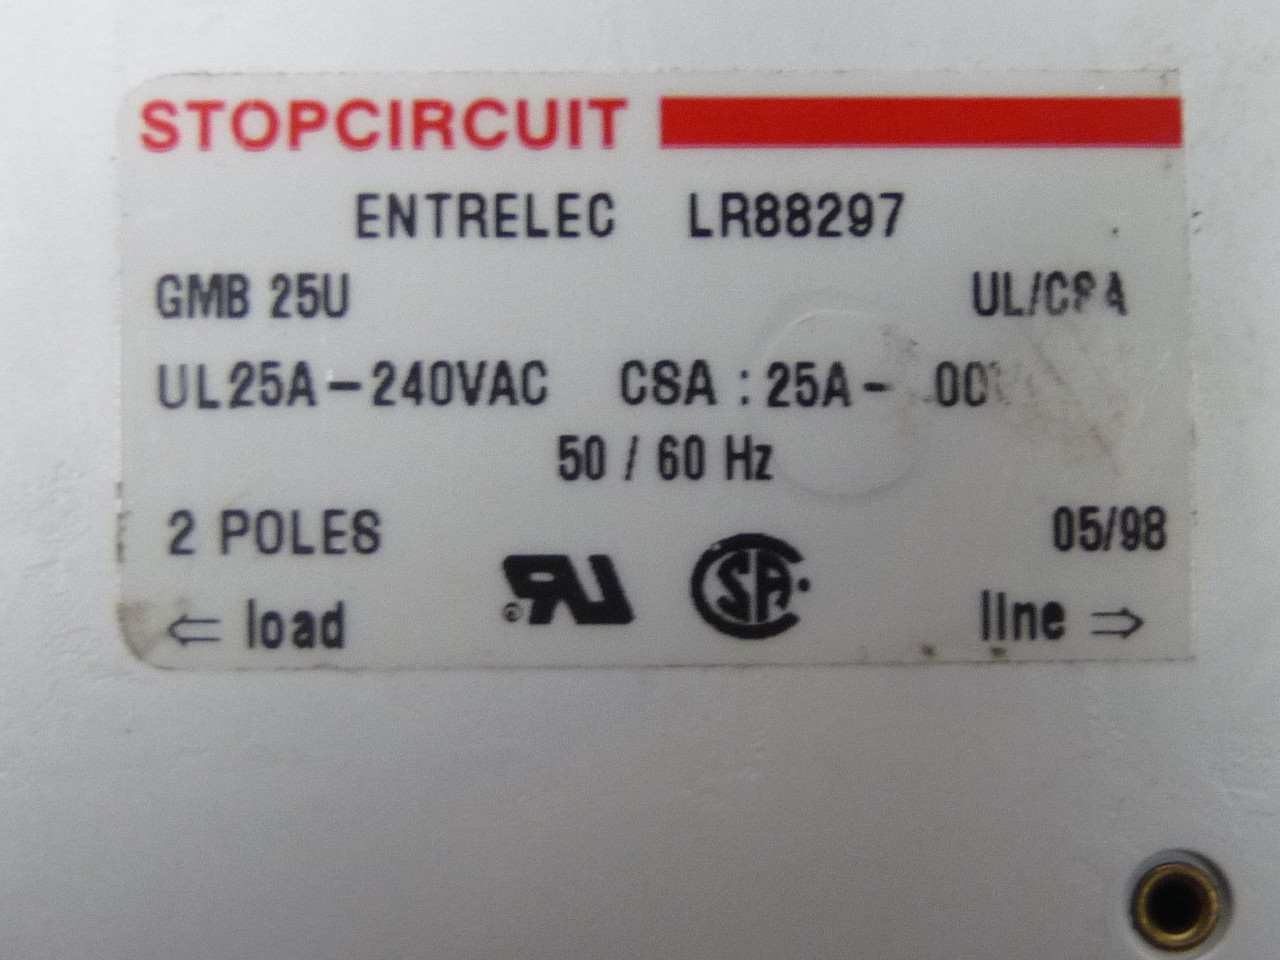 Entrelec LR88297 GMB-25U Stop-Circuit Breaker 25A 2P 50/60Hz USED